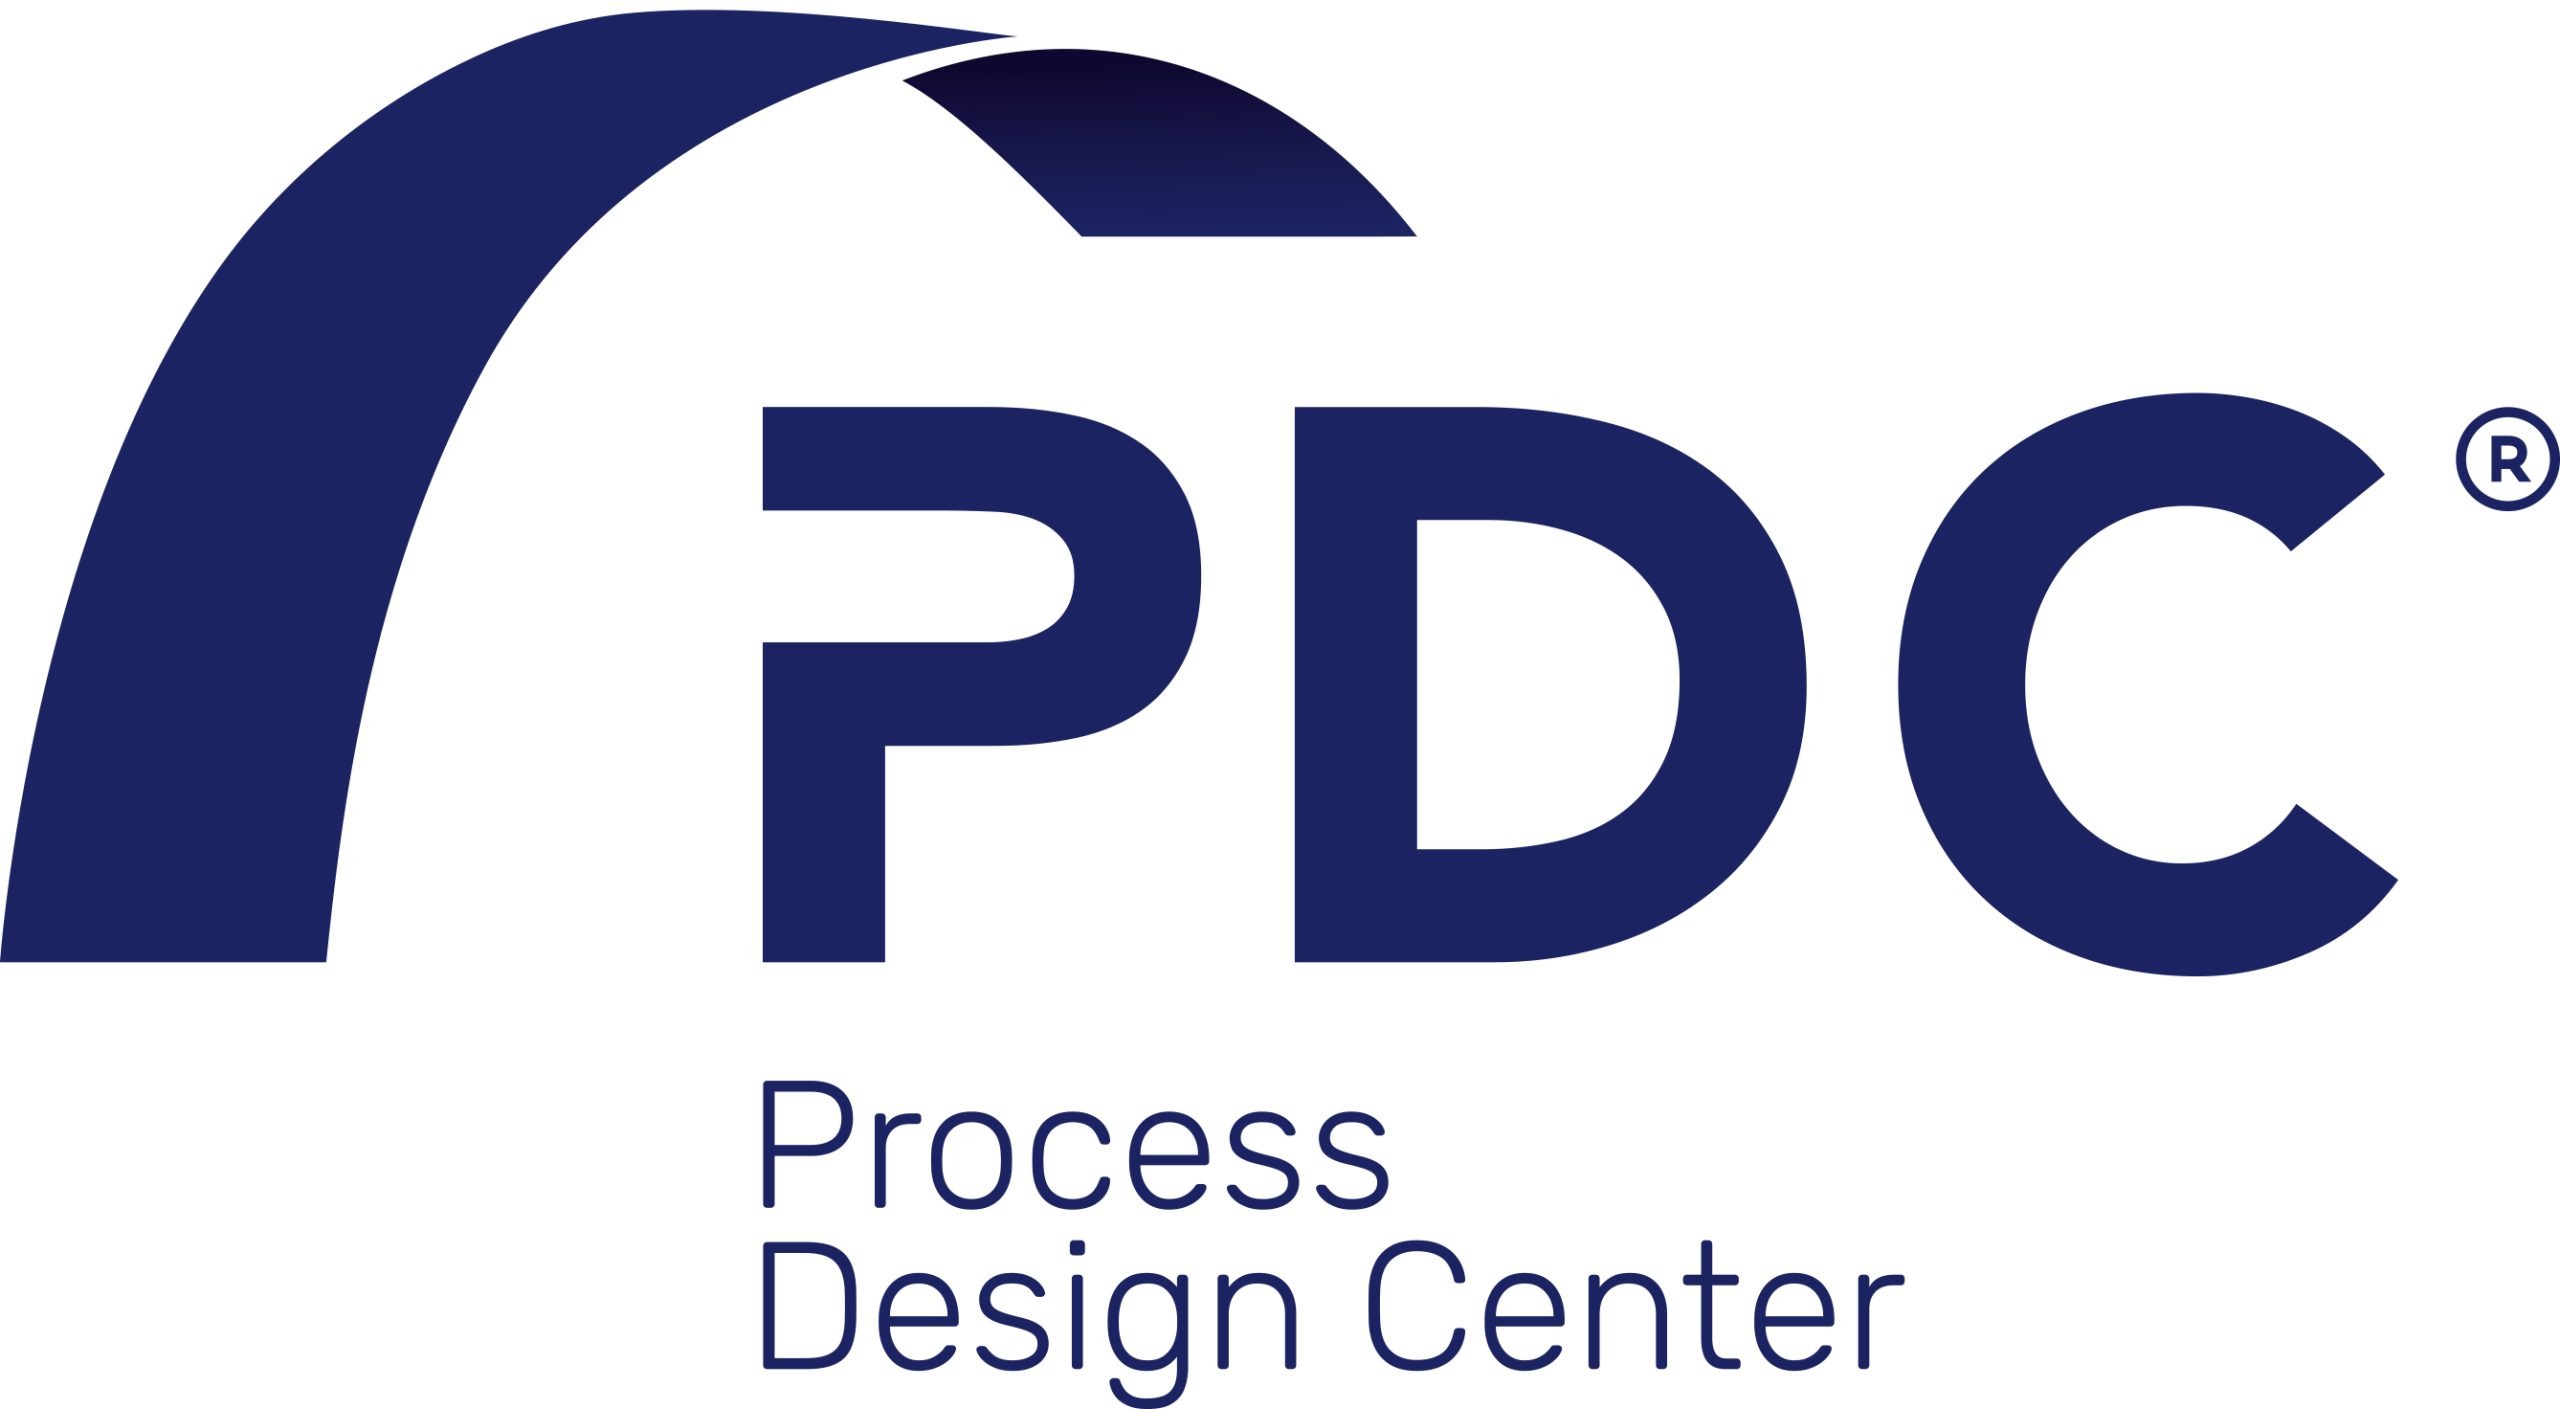 Process Design Center (PDC) logo